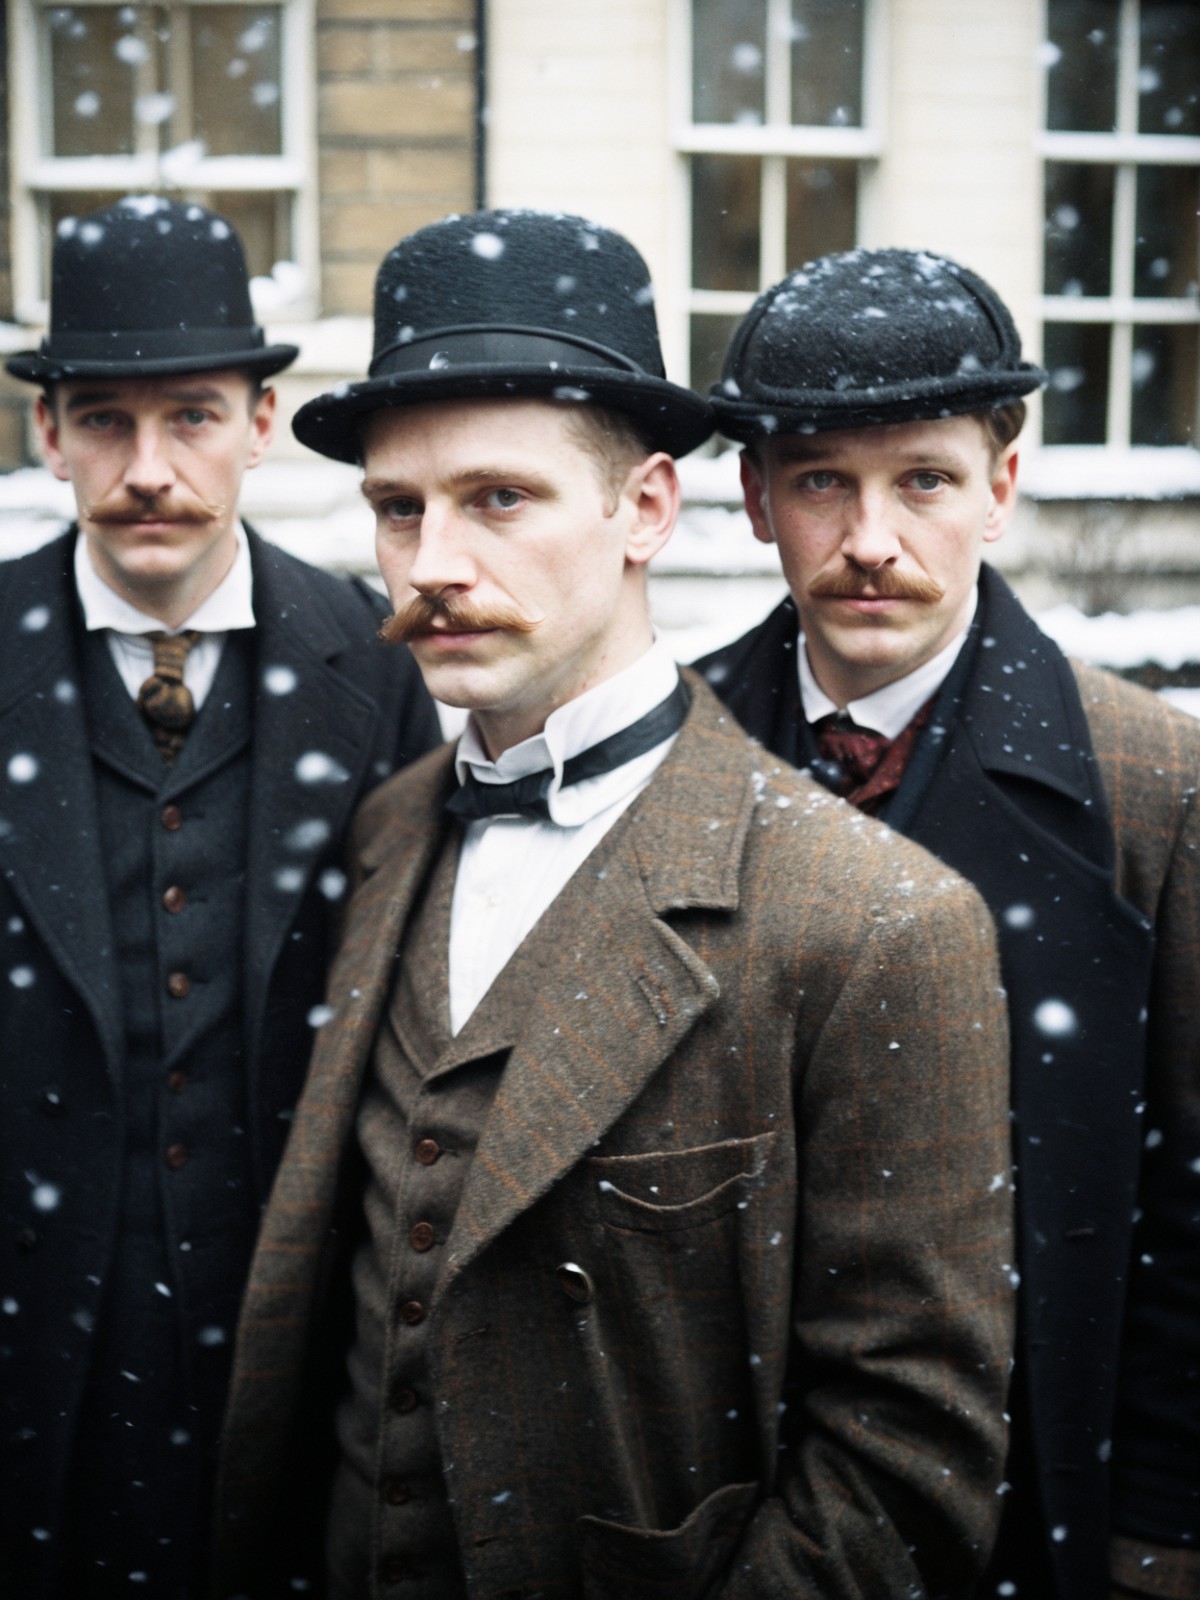 film grain analog photography,victorian-era clothing, two men standing, detective theme, london setting, bowler hat, deers...